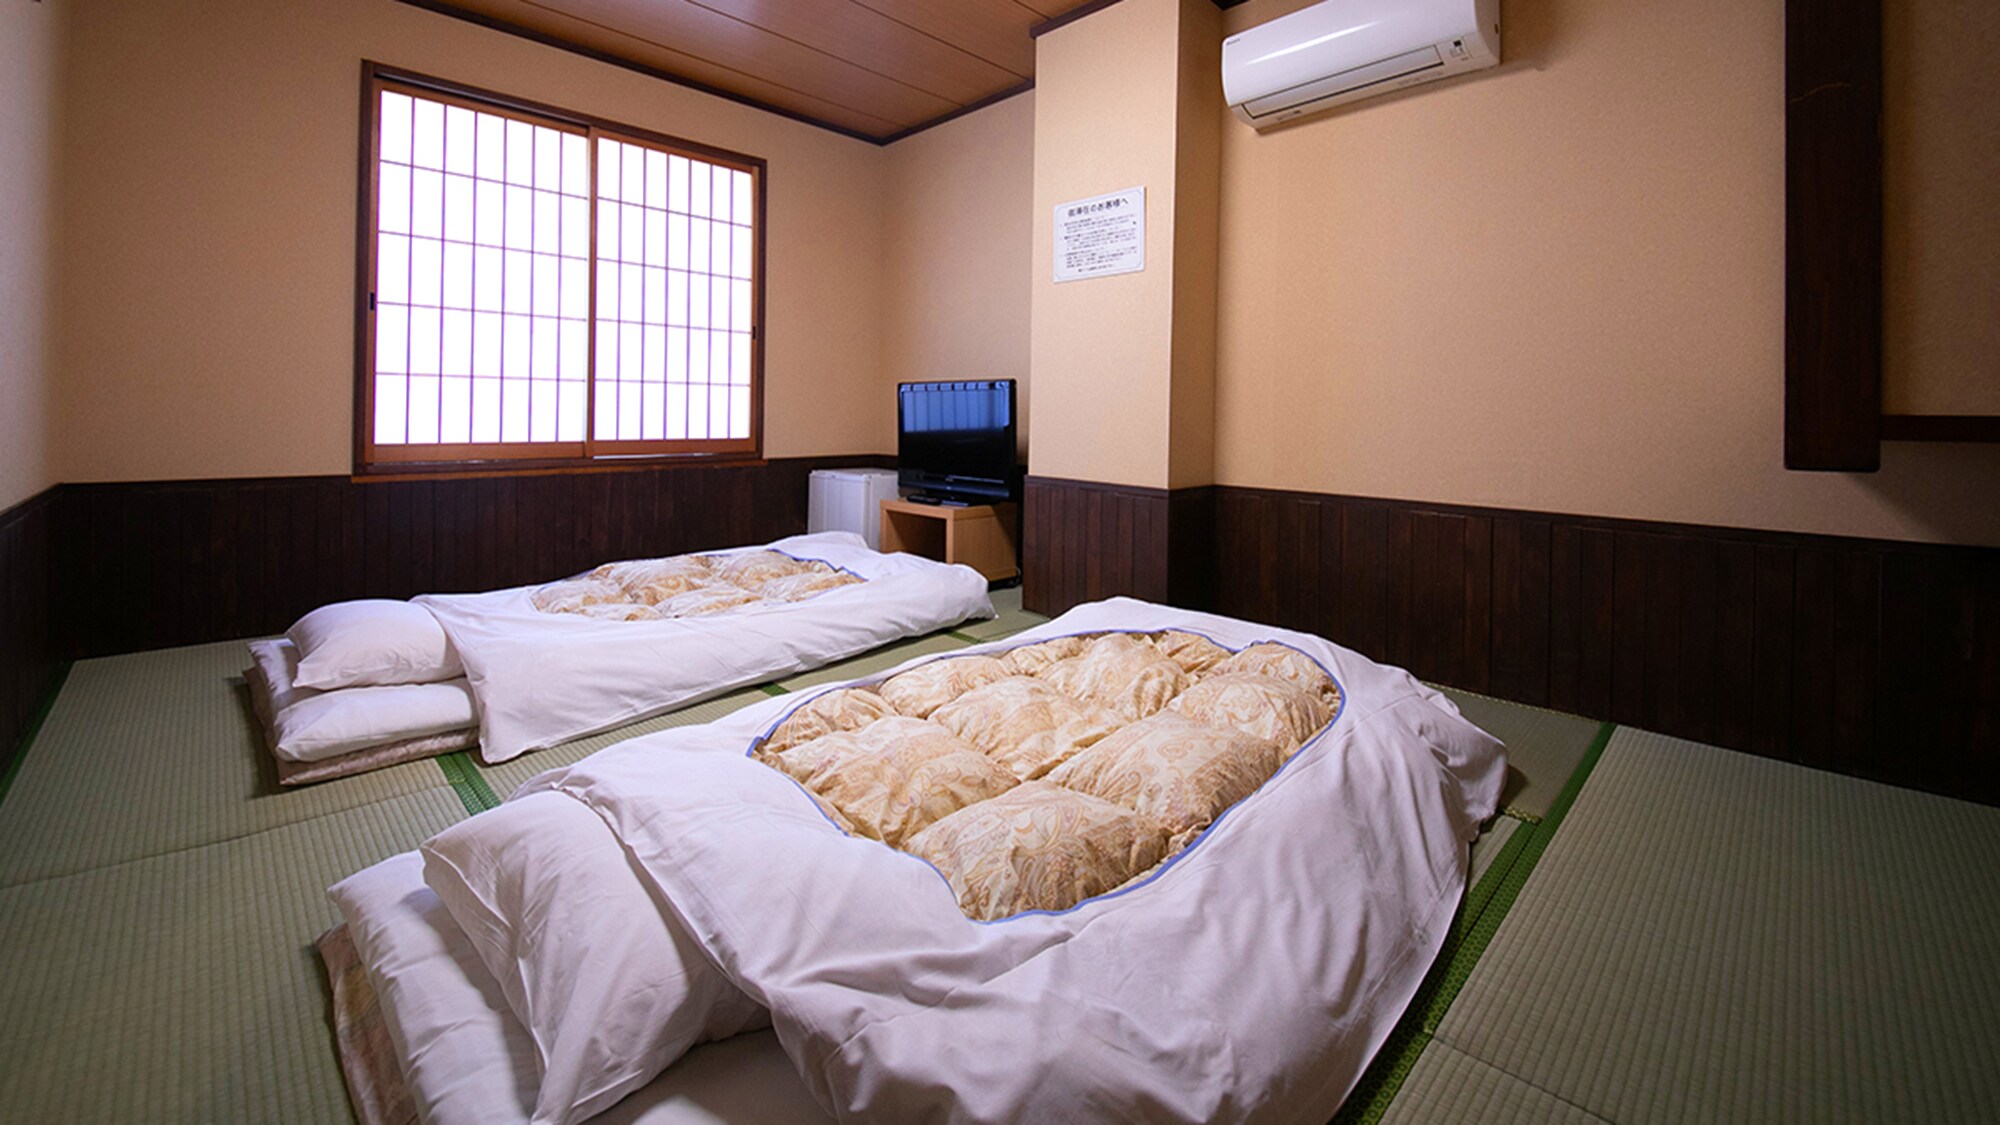 ■ Main building Japanese-style room 6-8 tatami mats ■